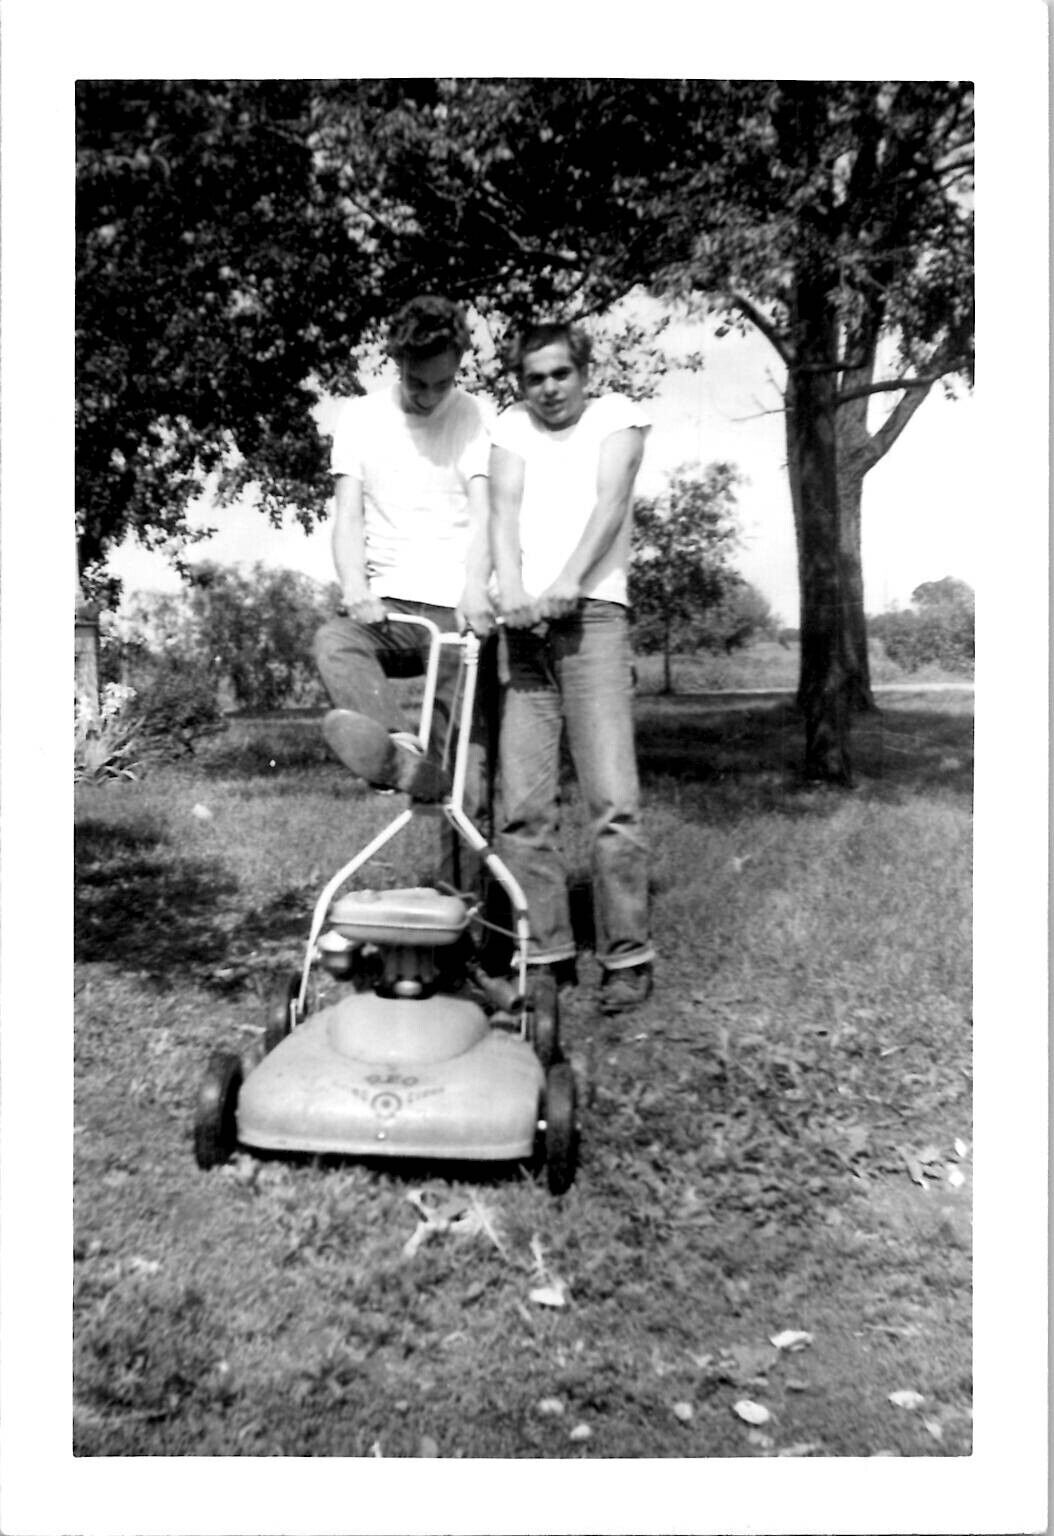 Hardworking Teenage Boys Mowing Lawn Grass Labor Americana 1950s Vintage Photo